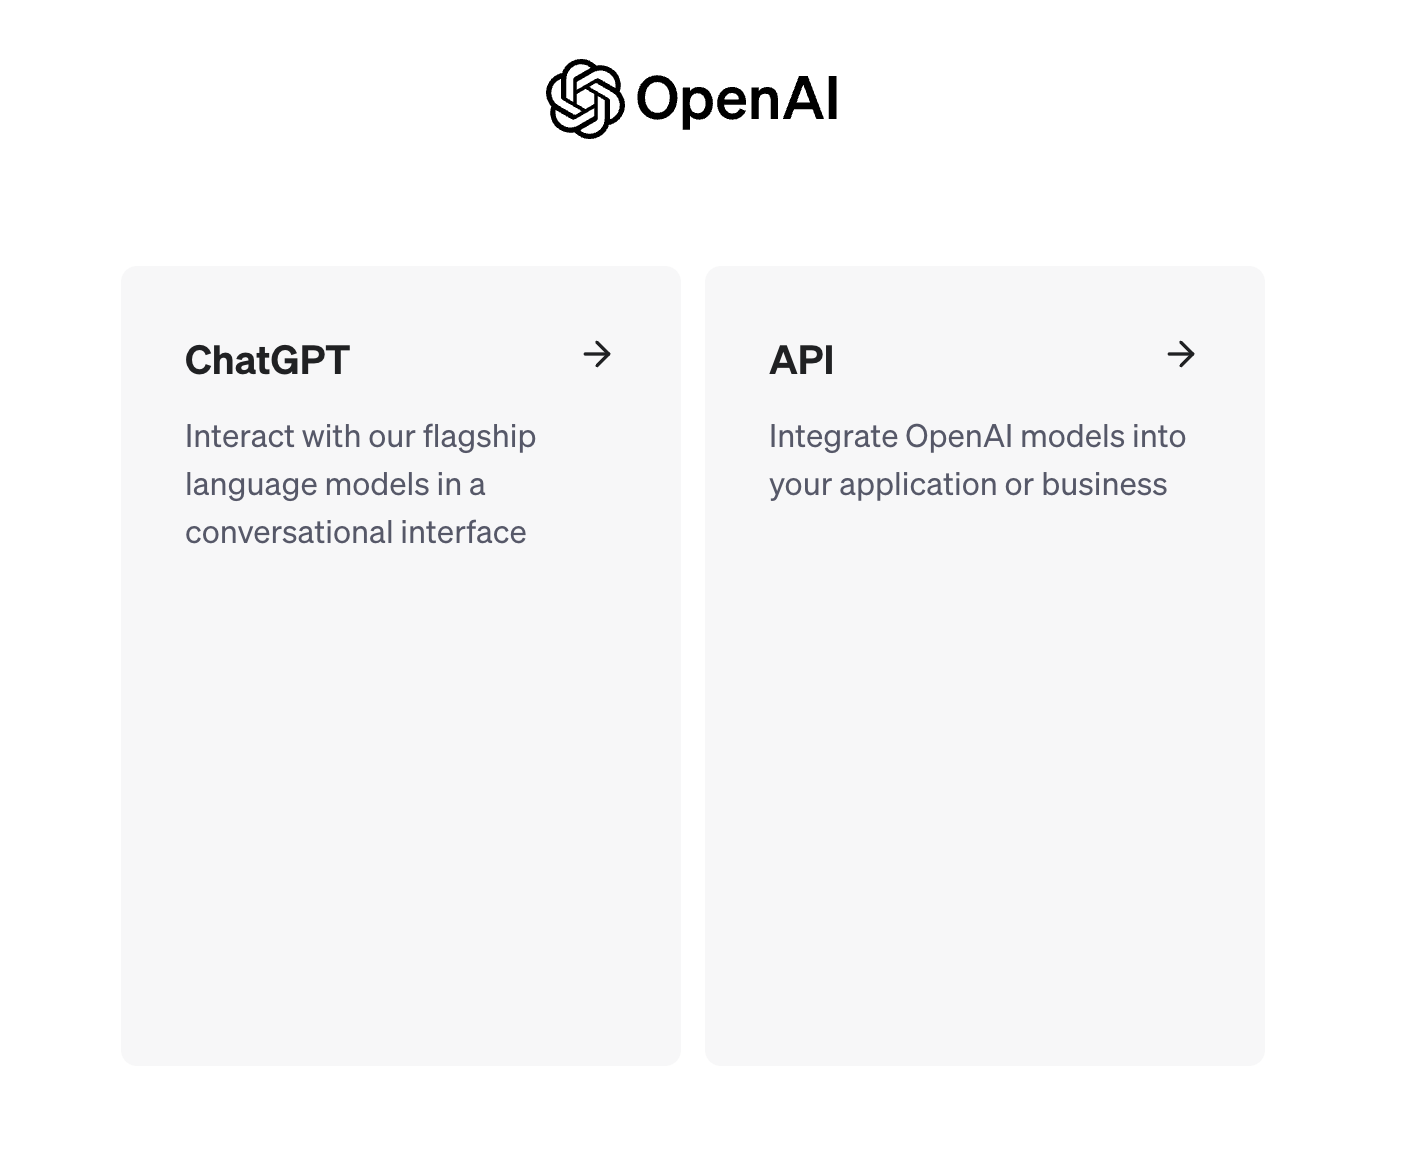 OpenAIのAPIを選択